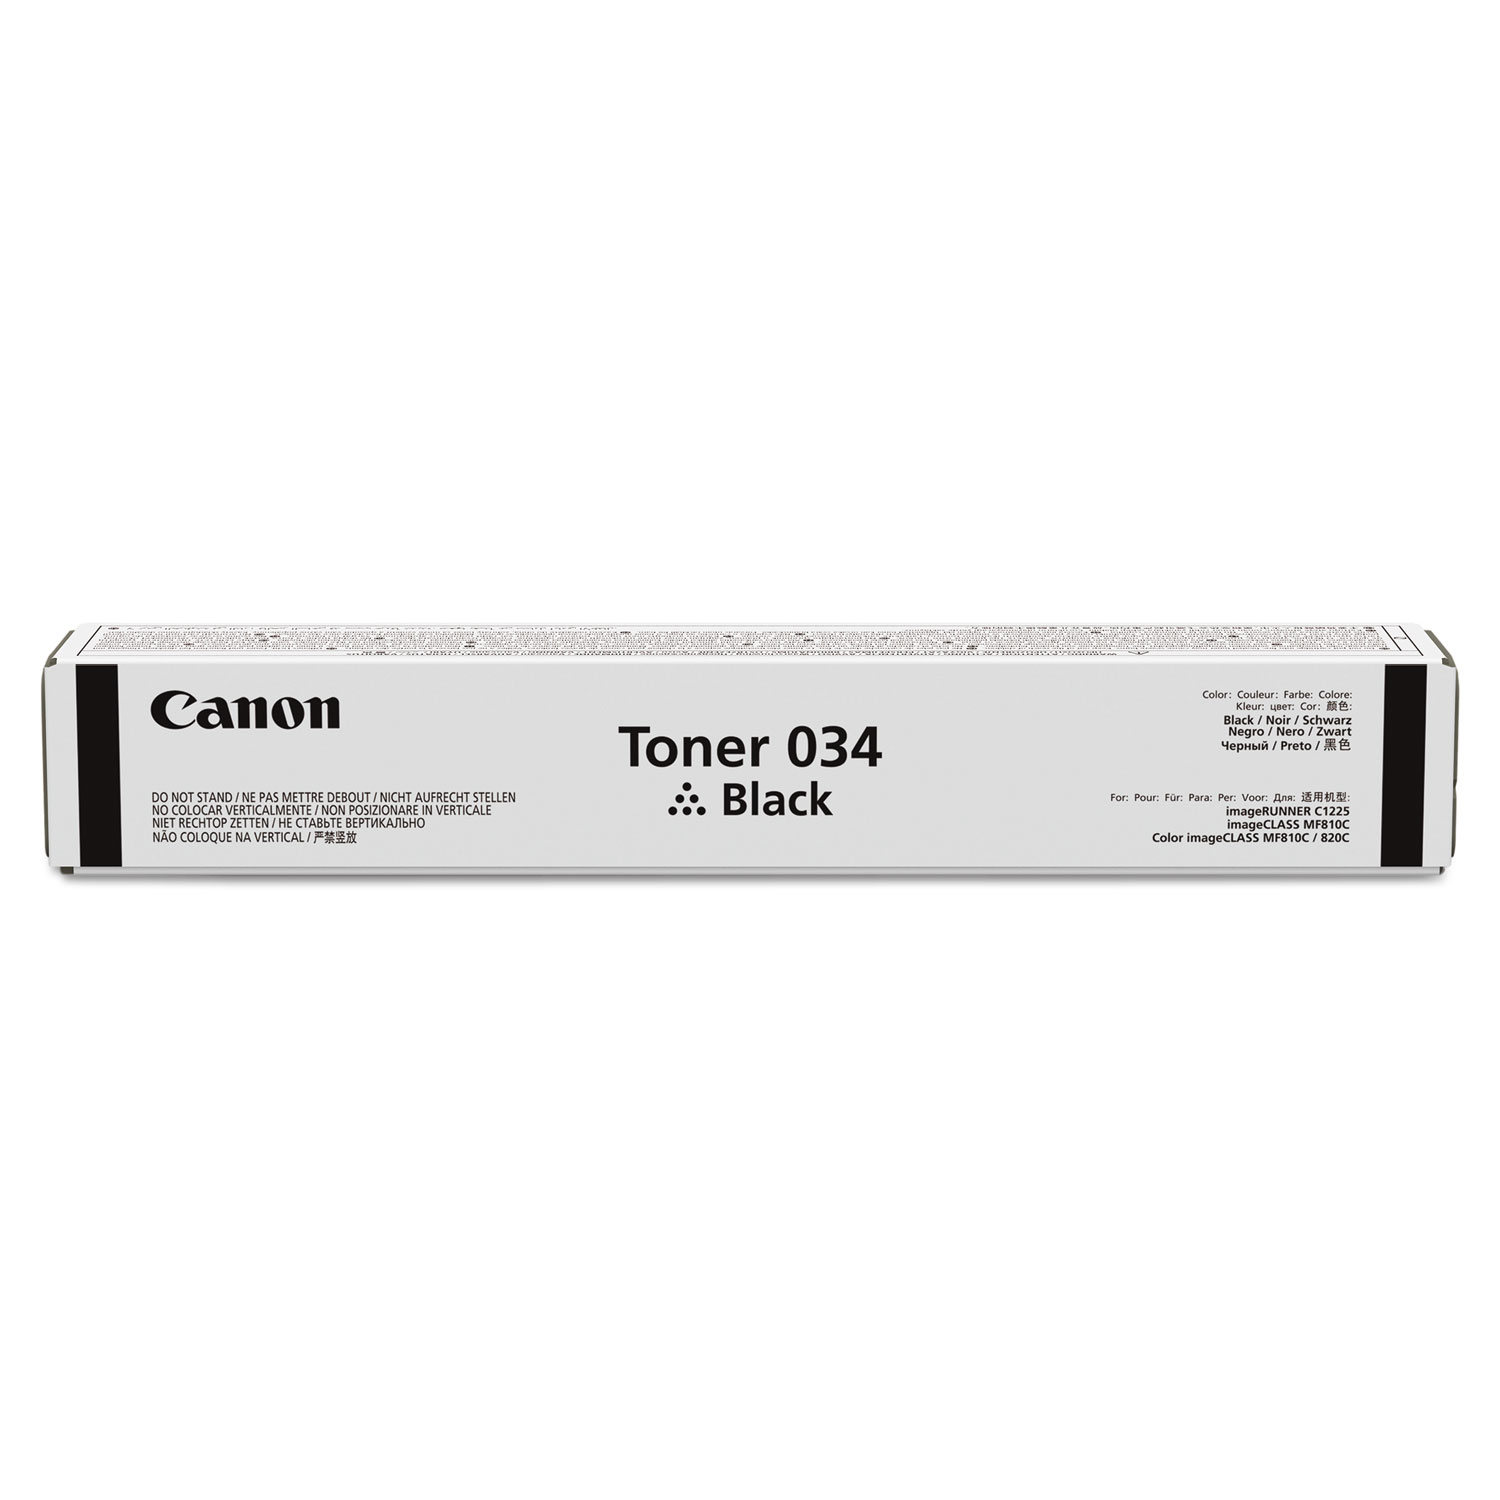  Canon 9454B001 9454B001 (034) Toner, 12000 Page-Yield, Black (CNM9454B001) 